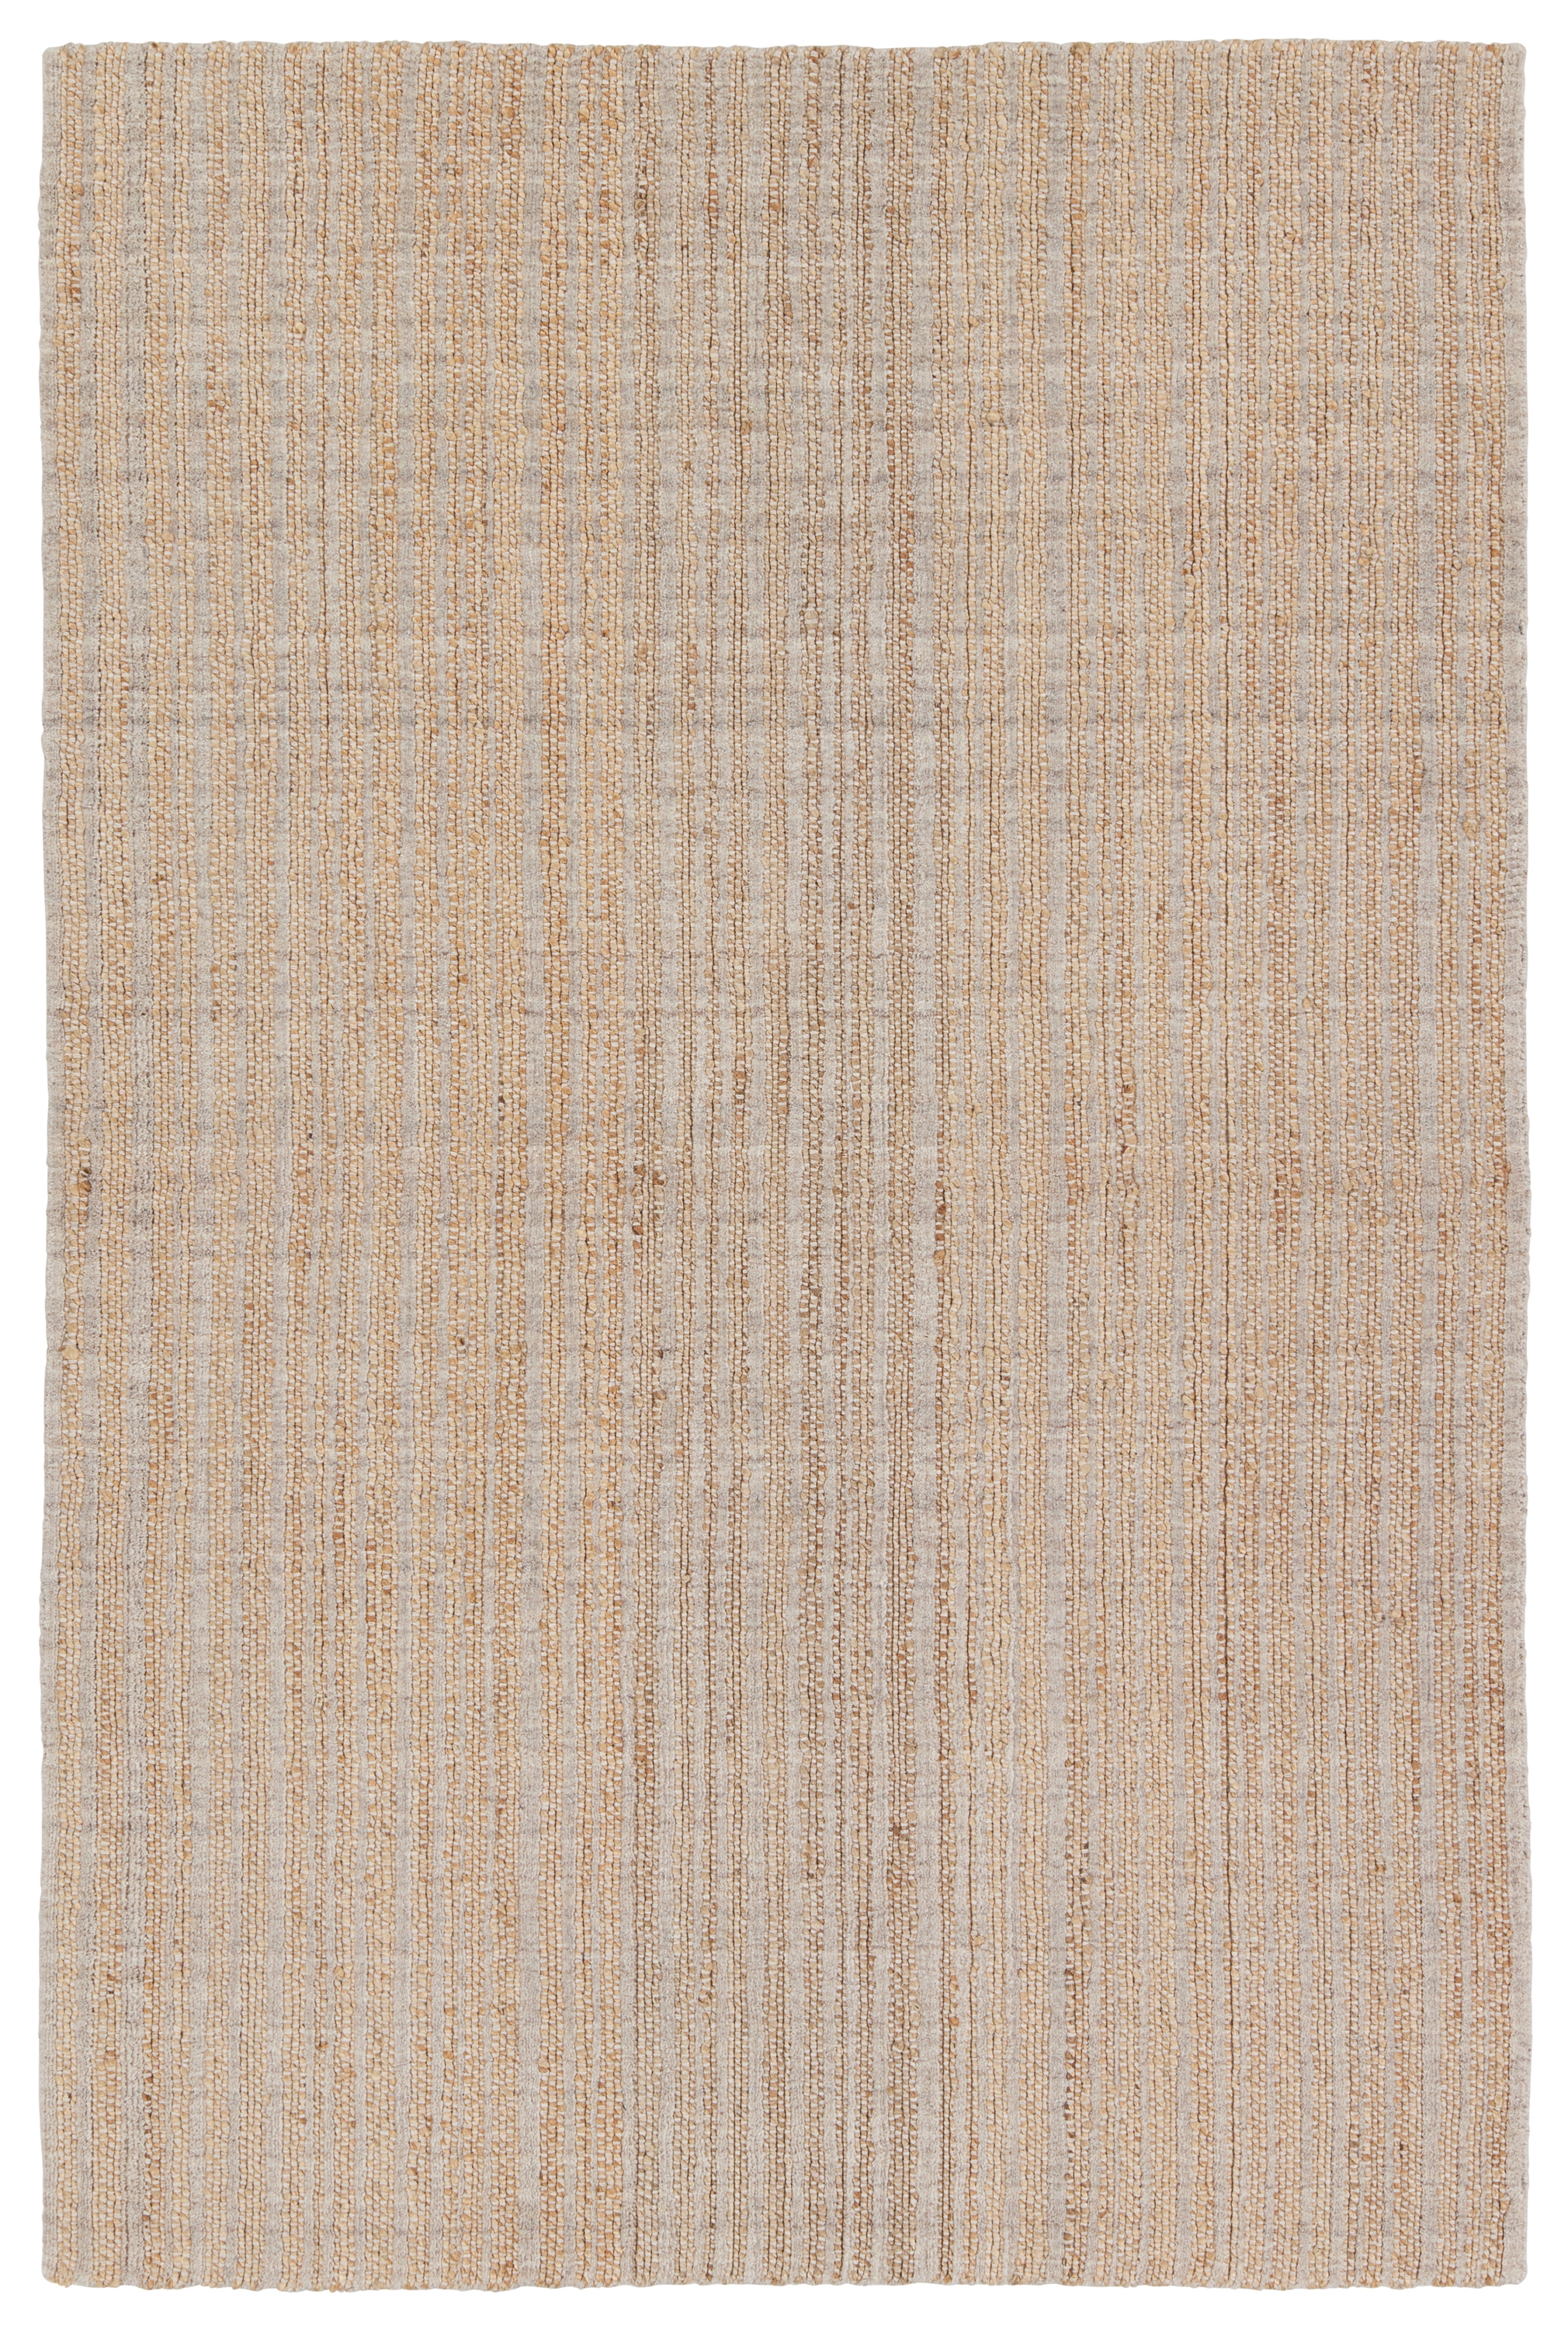 Abdar Handmade Striped Tan/ Gray Area Rug (10'X14') - Image 0